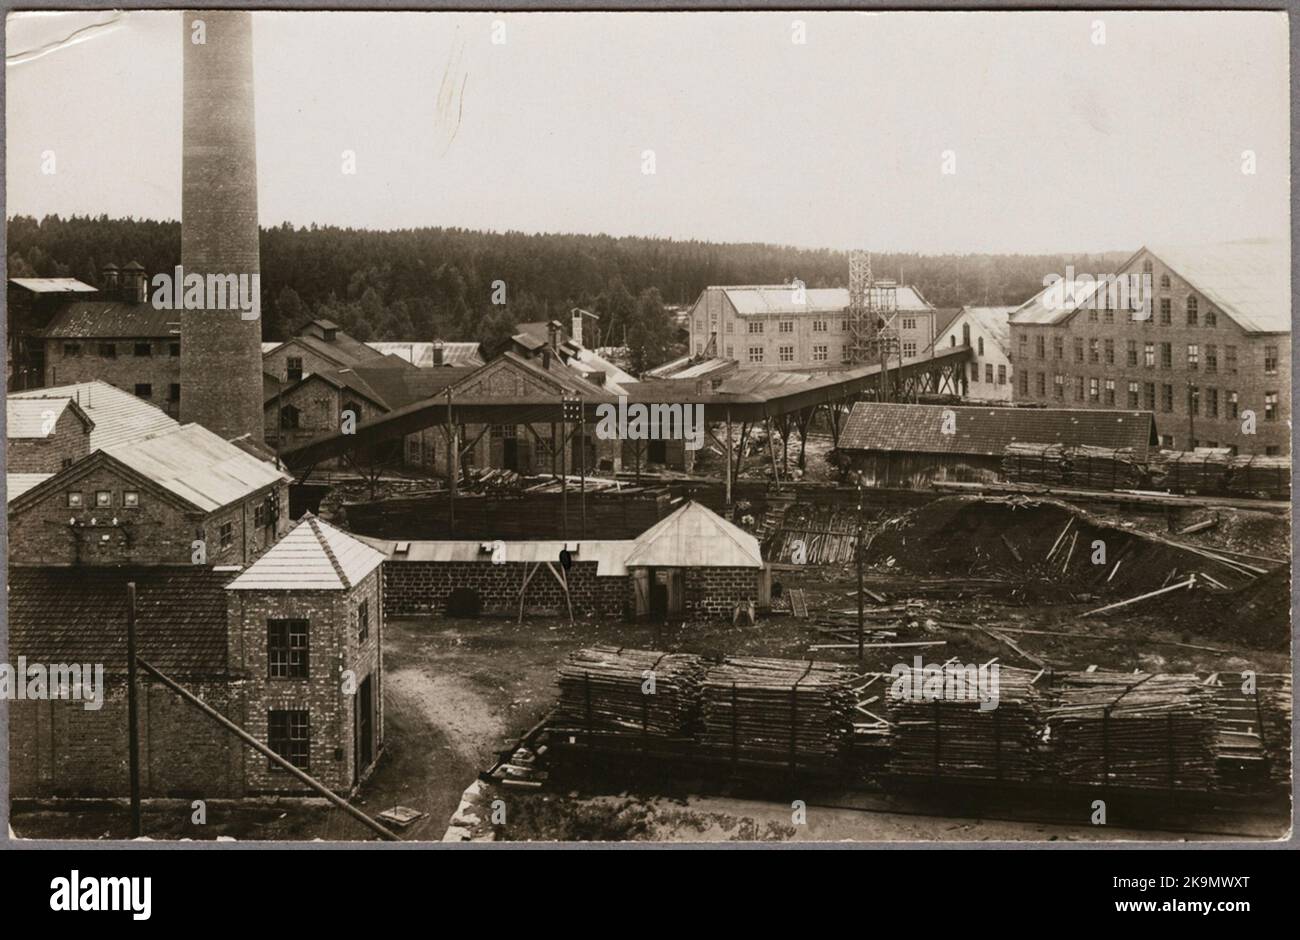 The paper mill in Grycksbo. Stock Photo